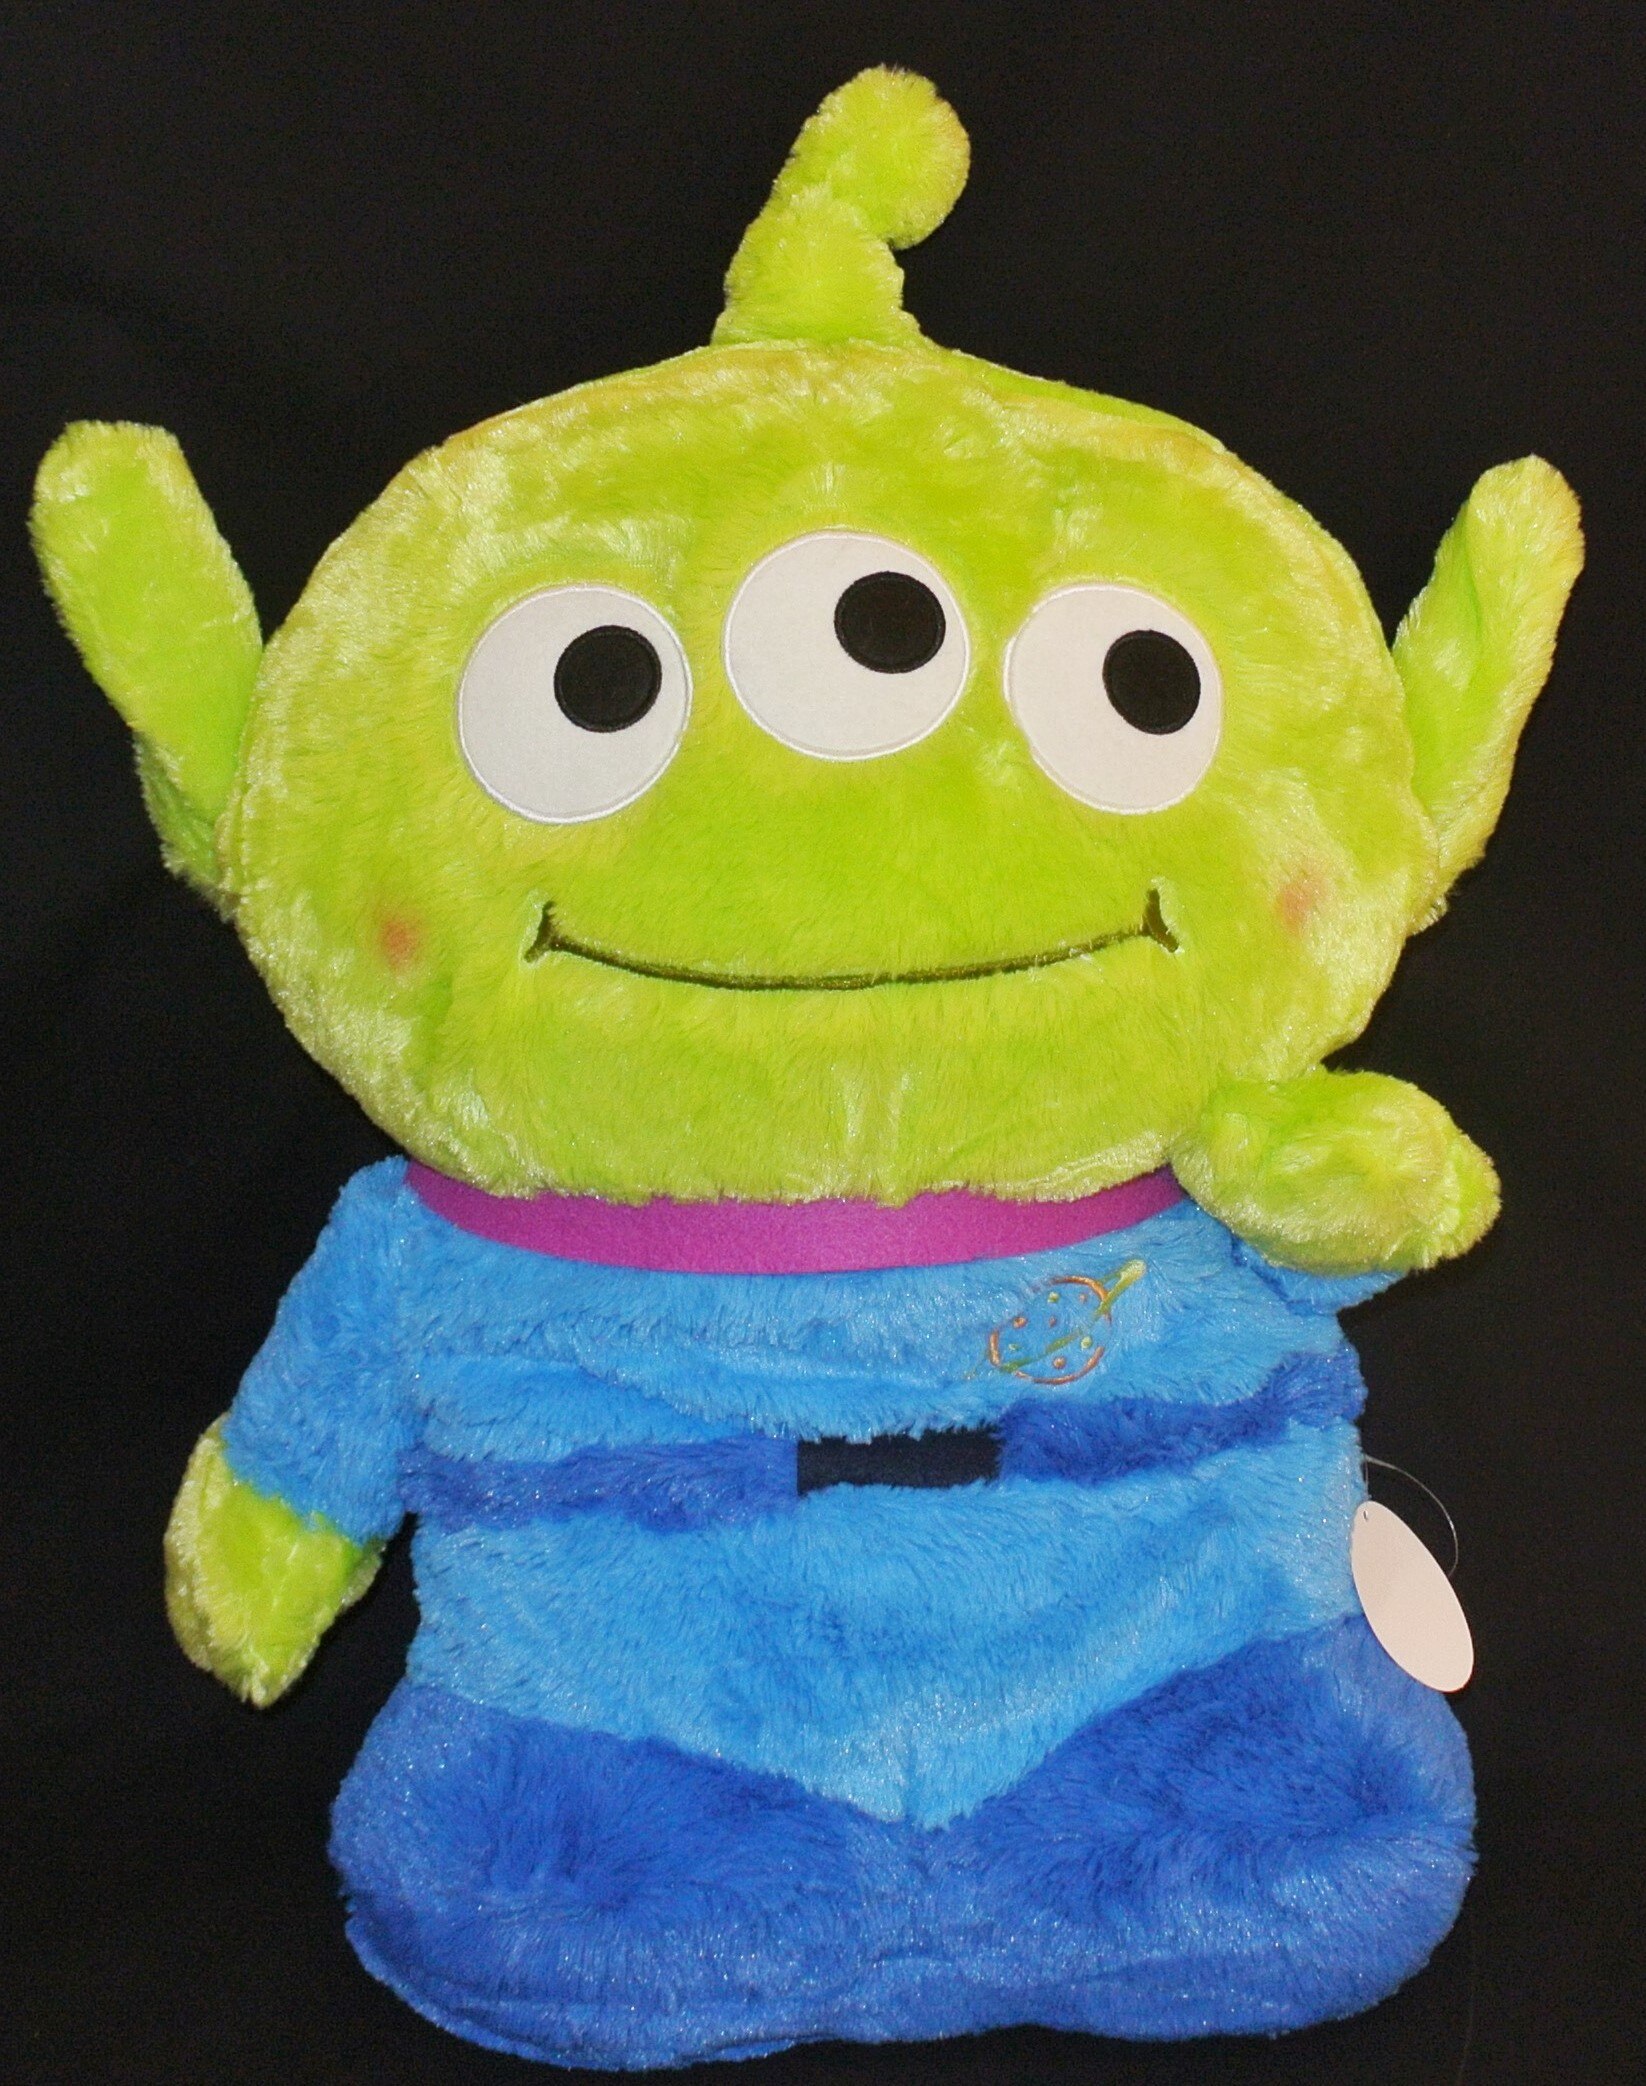 toy story alien plush